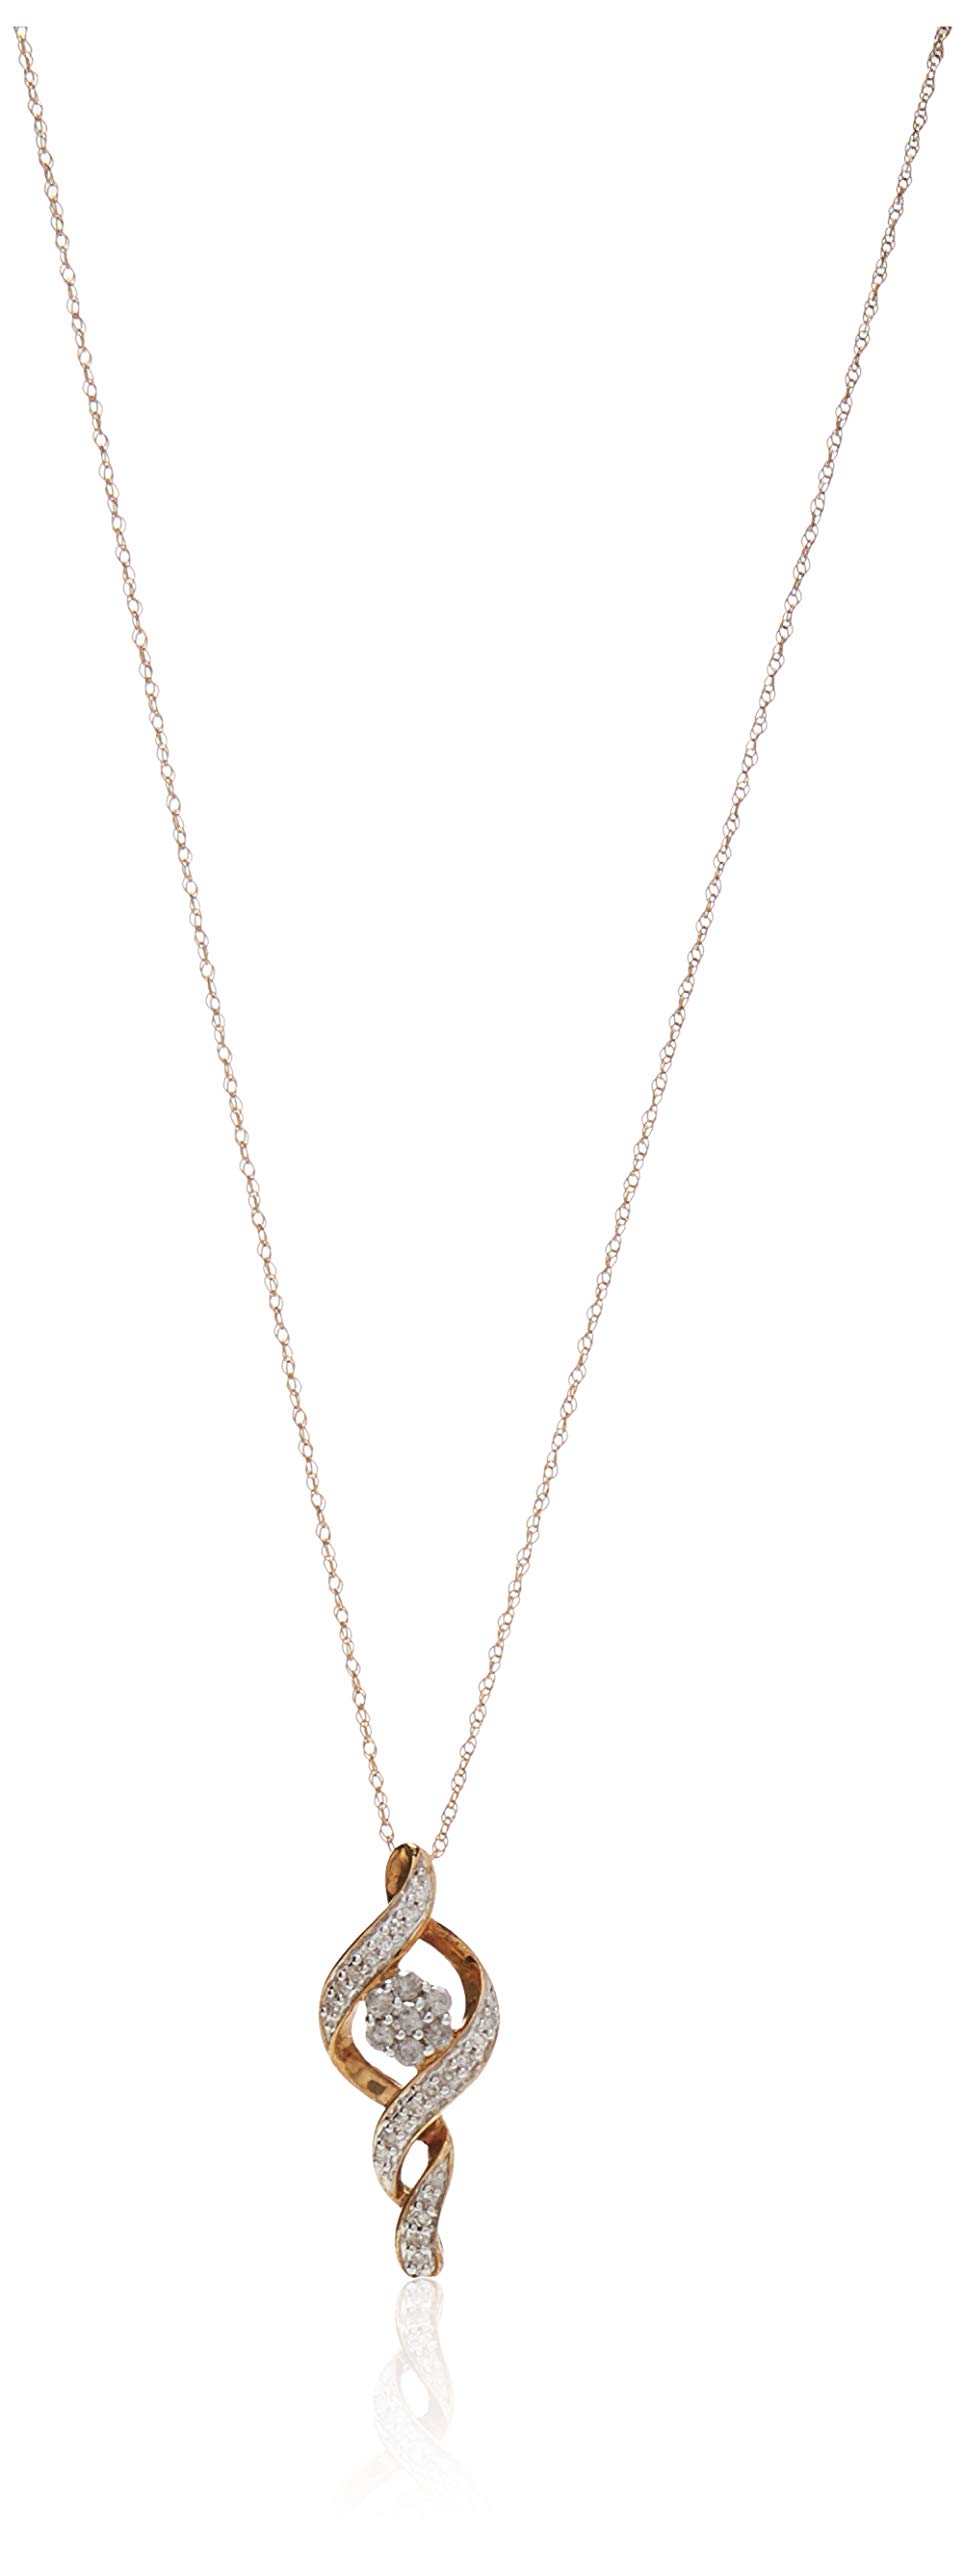 Amazon Collection 10K Diamond Twist Pendant Necklace (1/4 cttw)